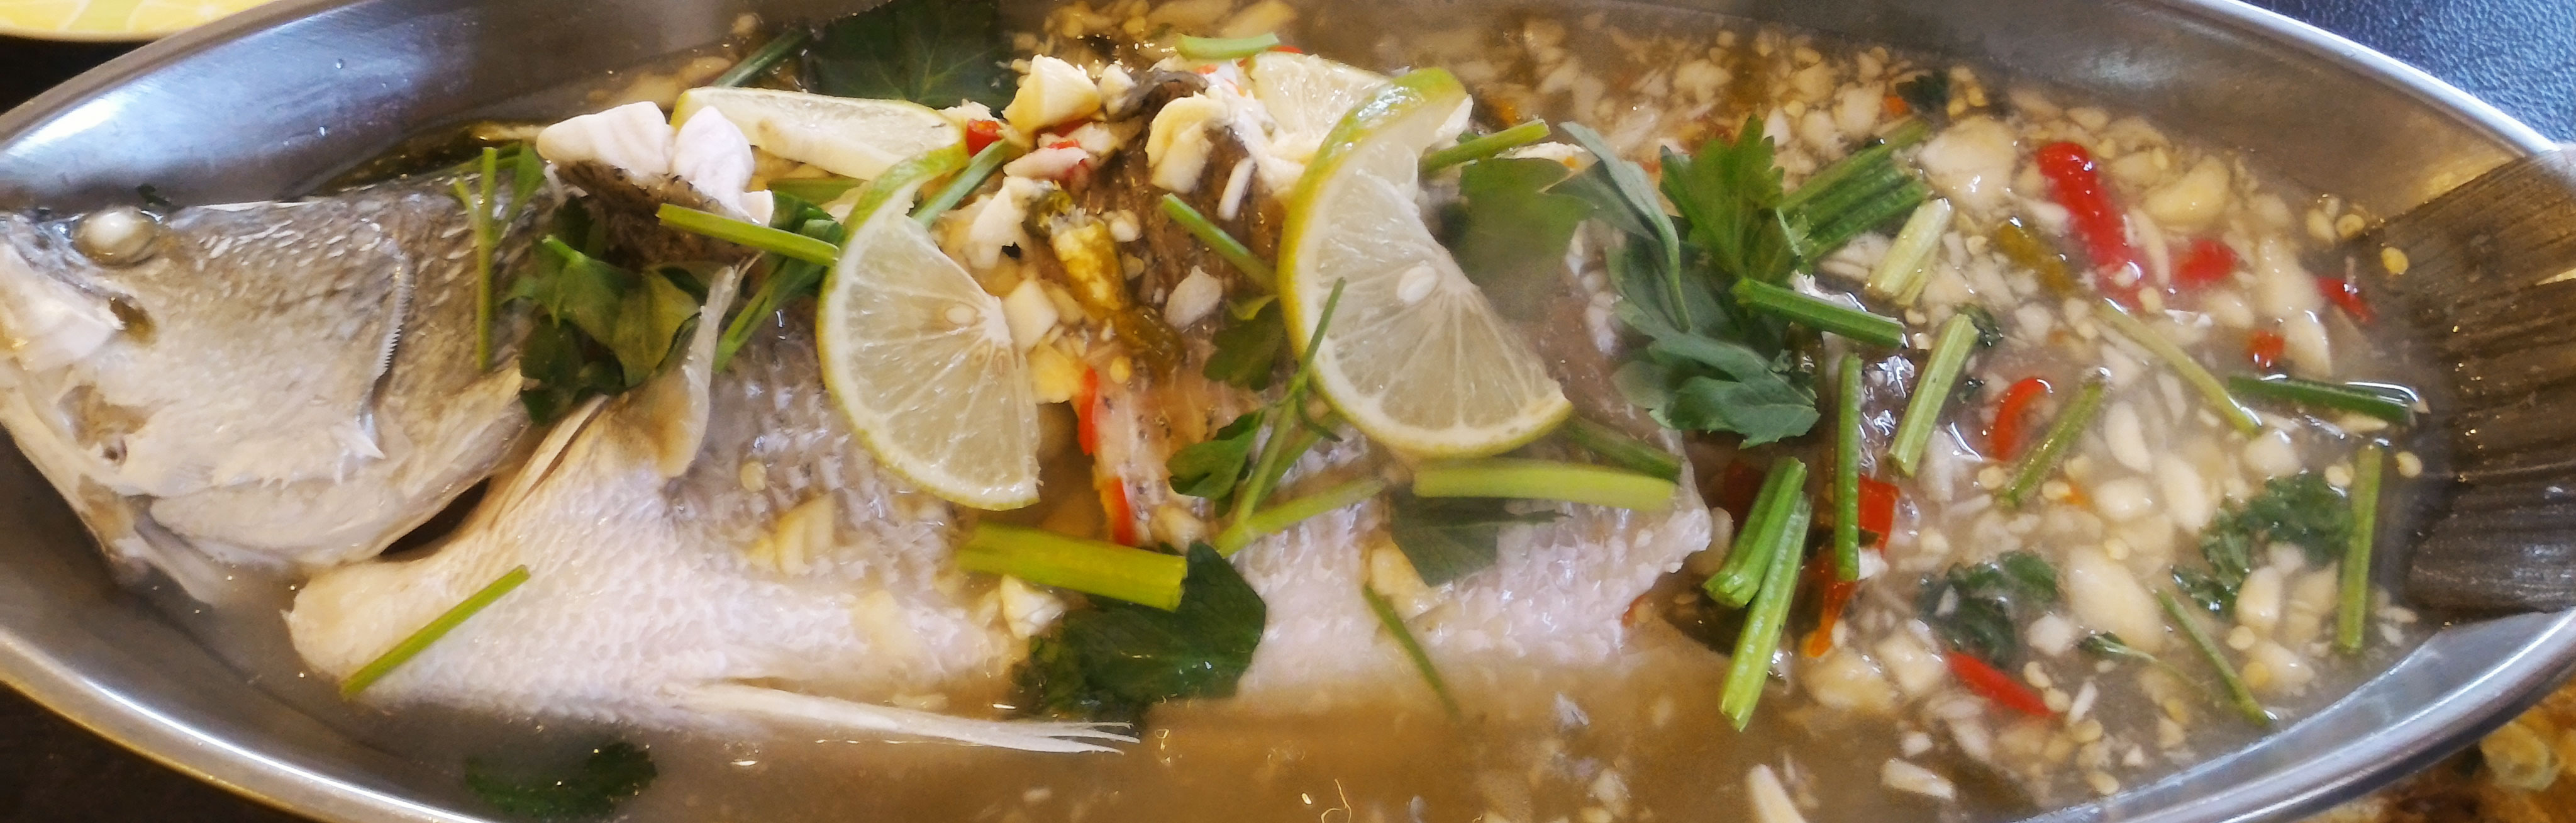 Masakan Ikan Siakap Stim Limau Versi Thai